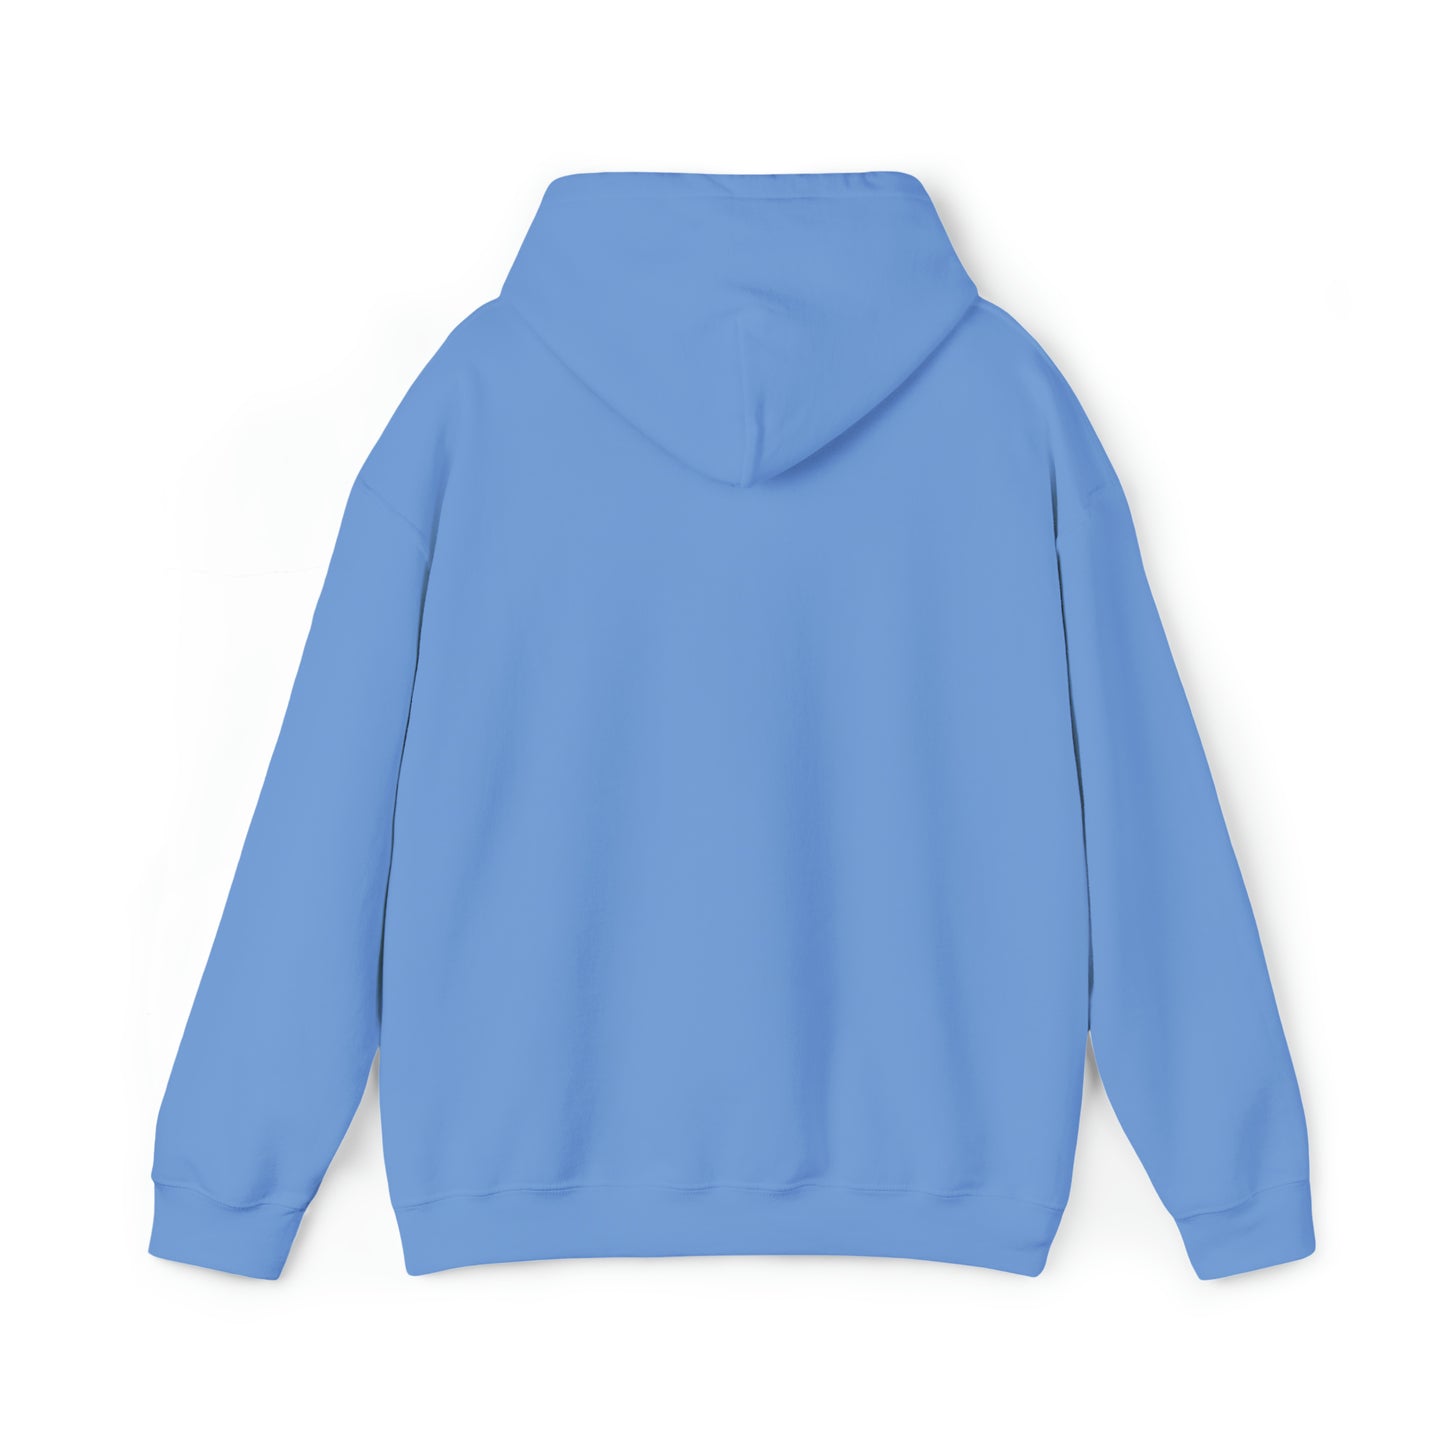 Claireandmoon Black Logo Unisex Heavy Blend™ Hooded Sweatshirt